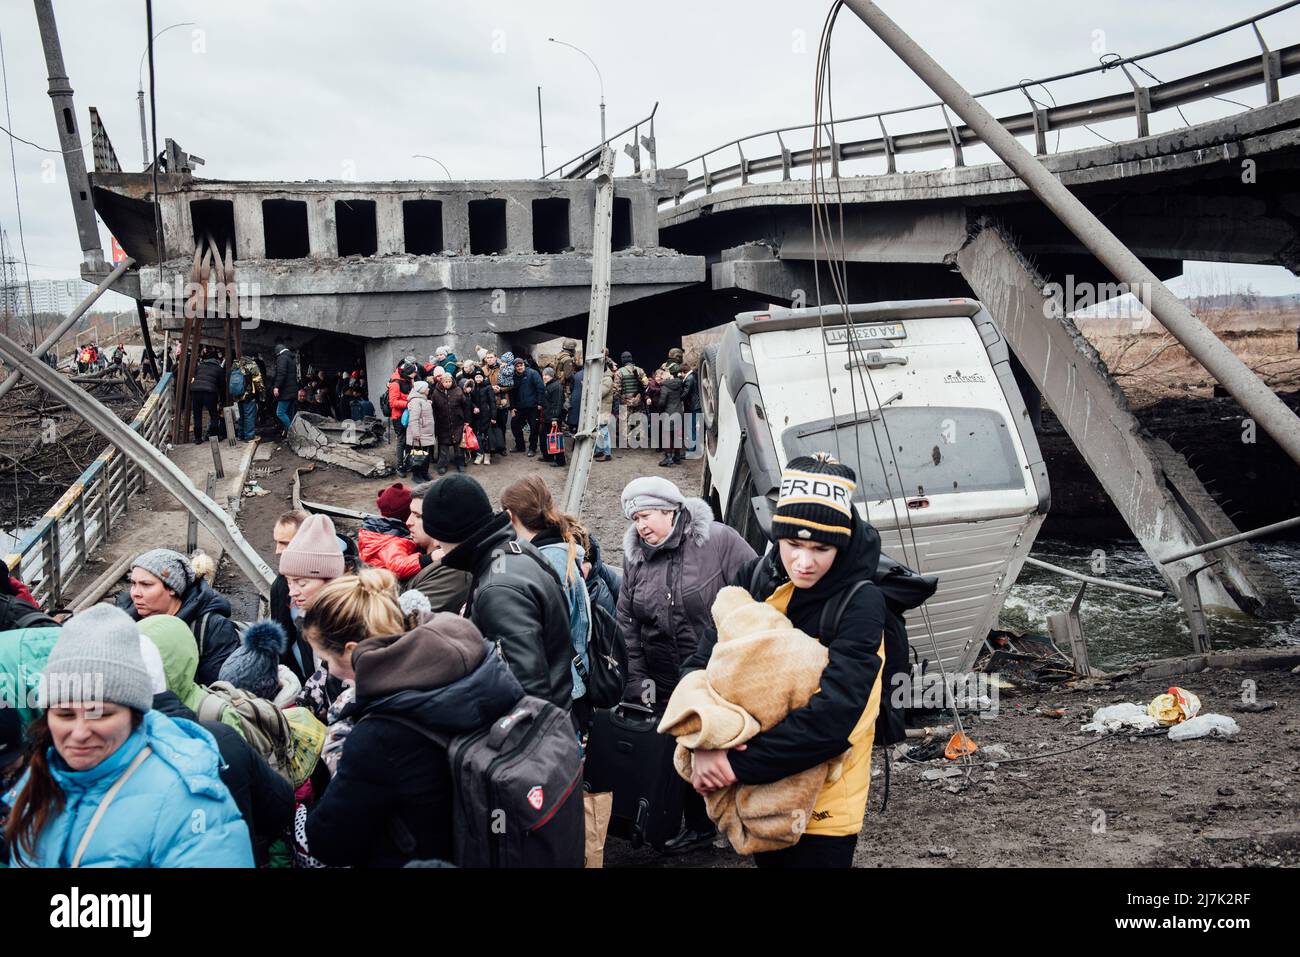 Adrien Vautier / Le Pictorium -  Russian invasion in Ukraine, fighting in Irpin, a suburb of Kiev -  5/3/2022  -  Ukraine / Irpin  -  Residents of Irp Stock Photo